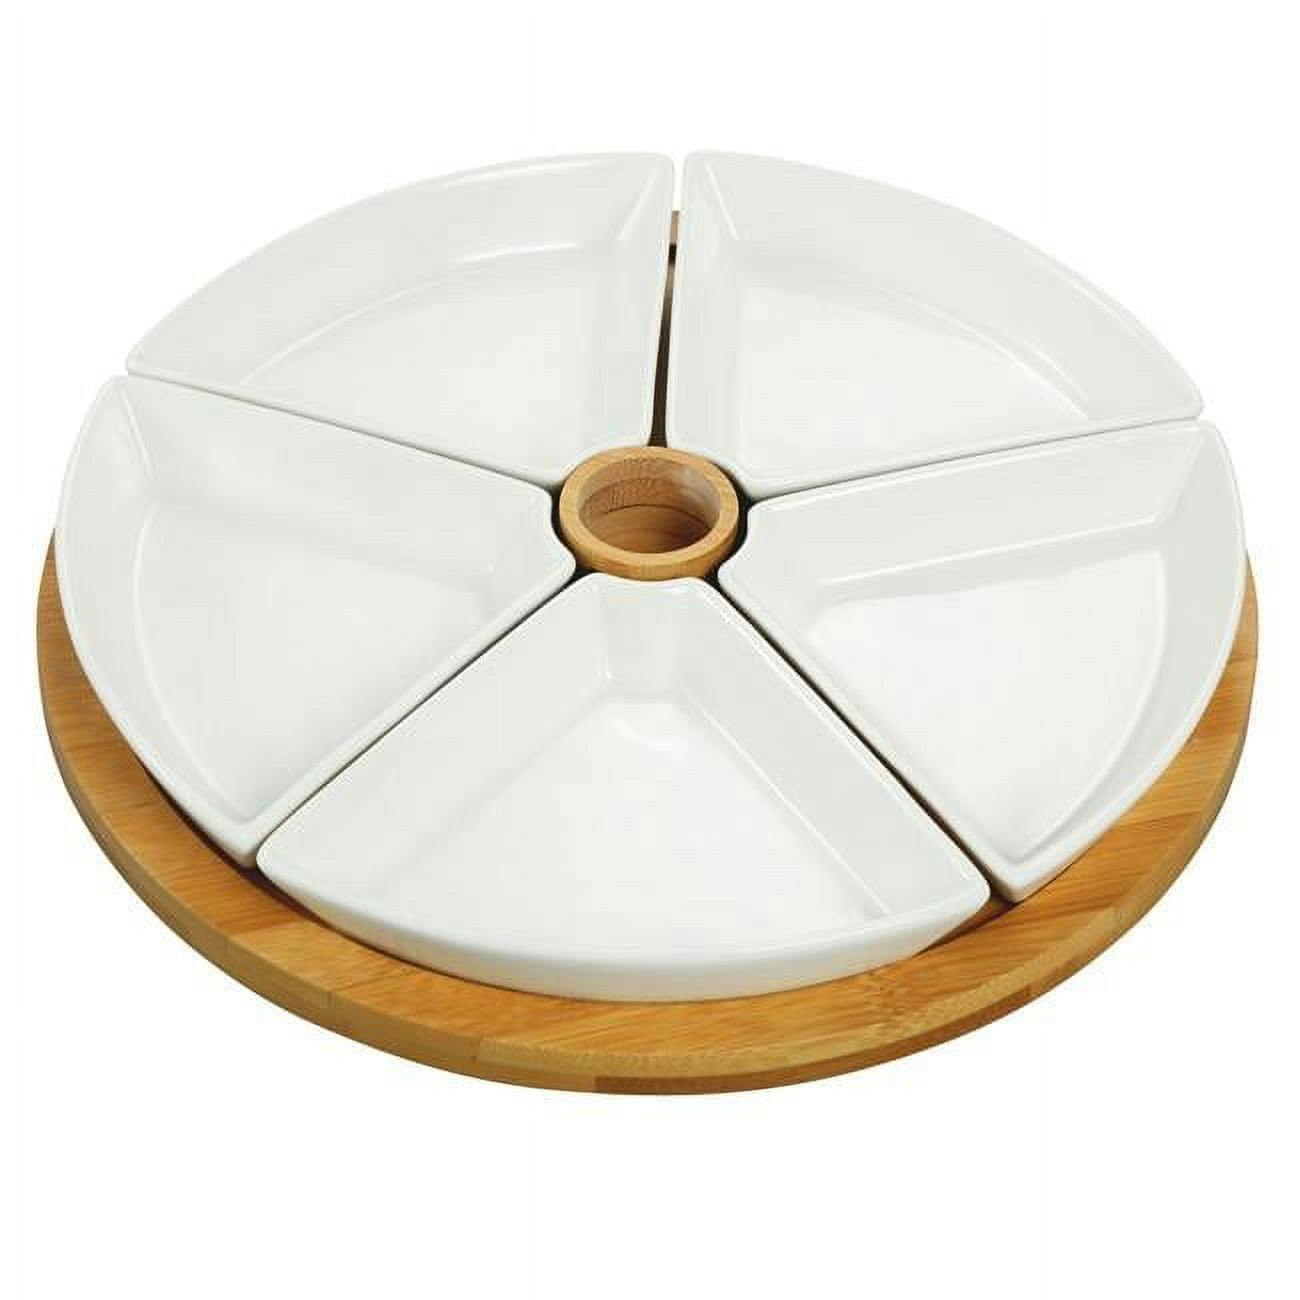 Elama Signature 7-Piece Round Bamboo & White Ceramic Appetizer Set